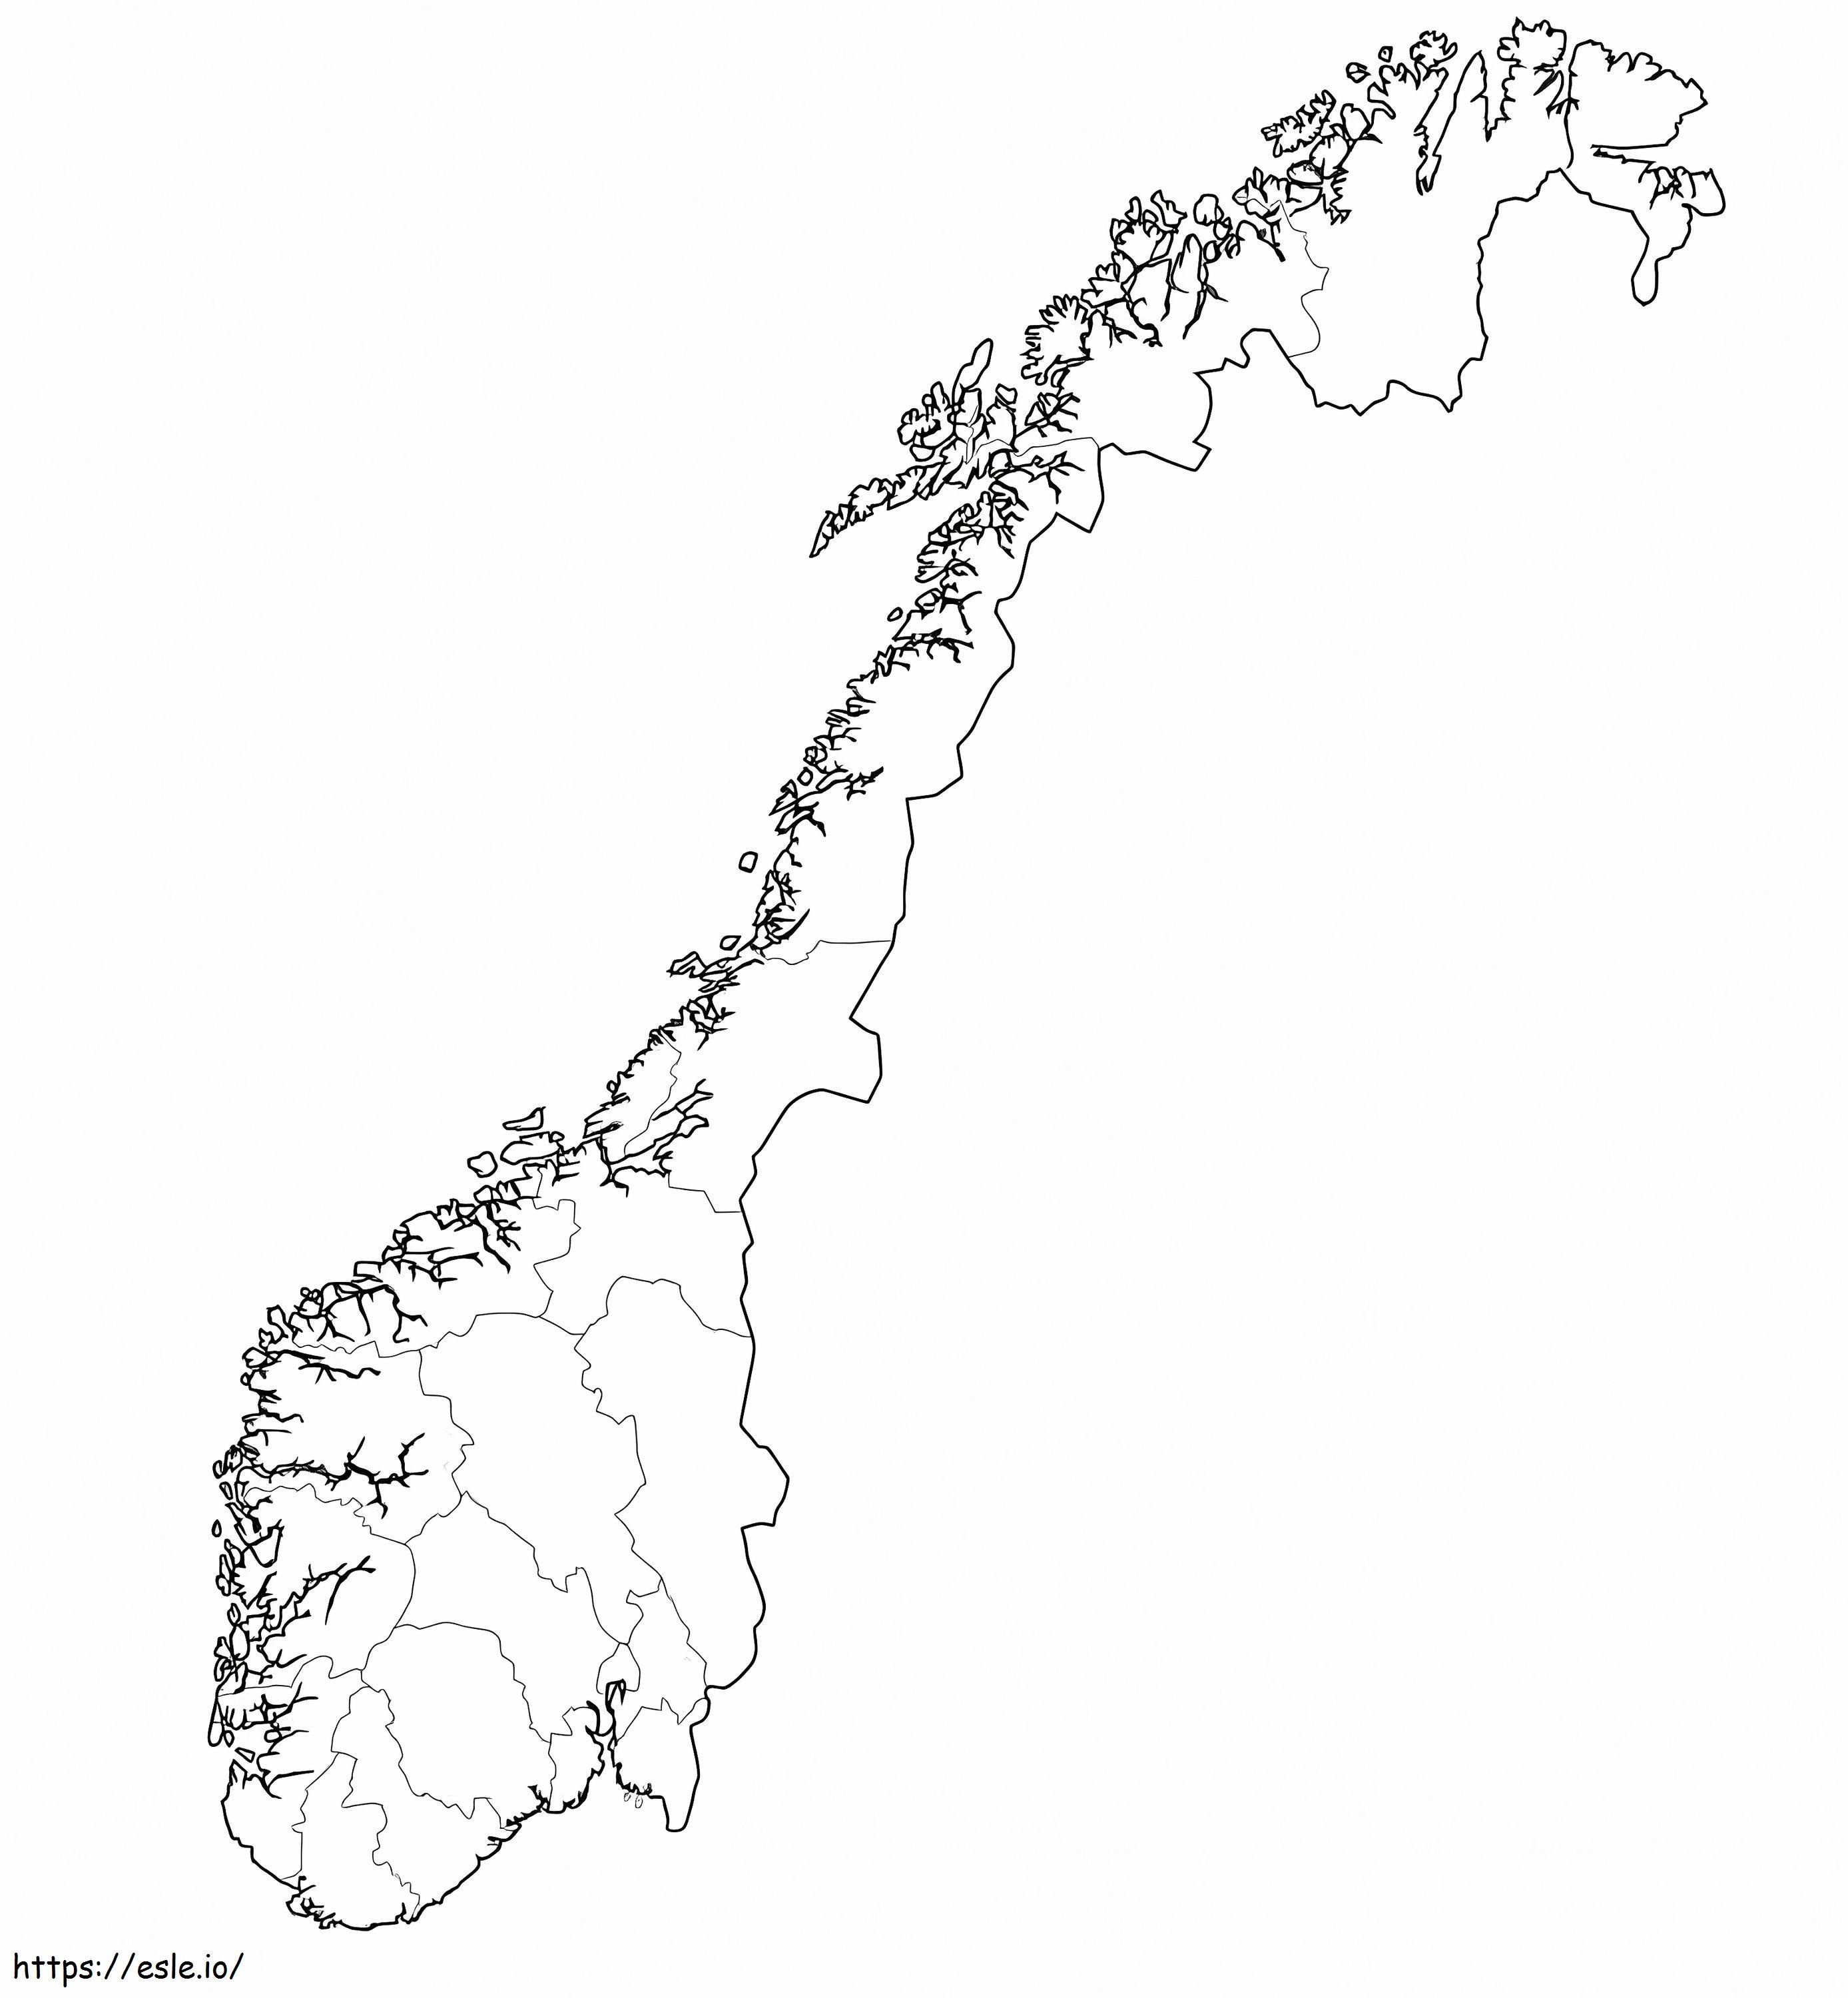 Mapa Norwegii 2 kolorowanka